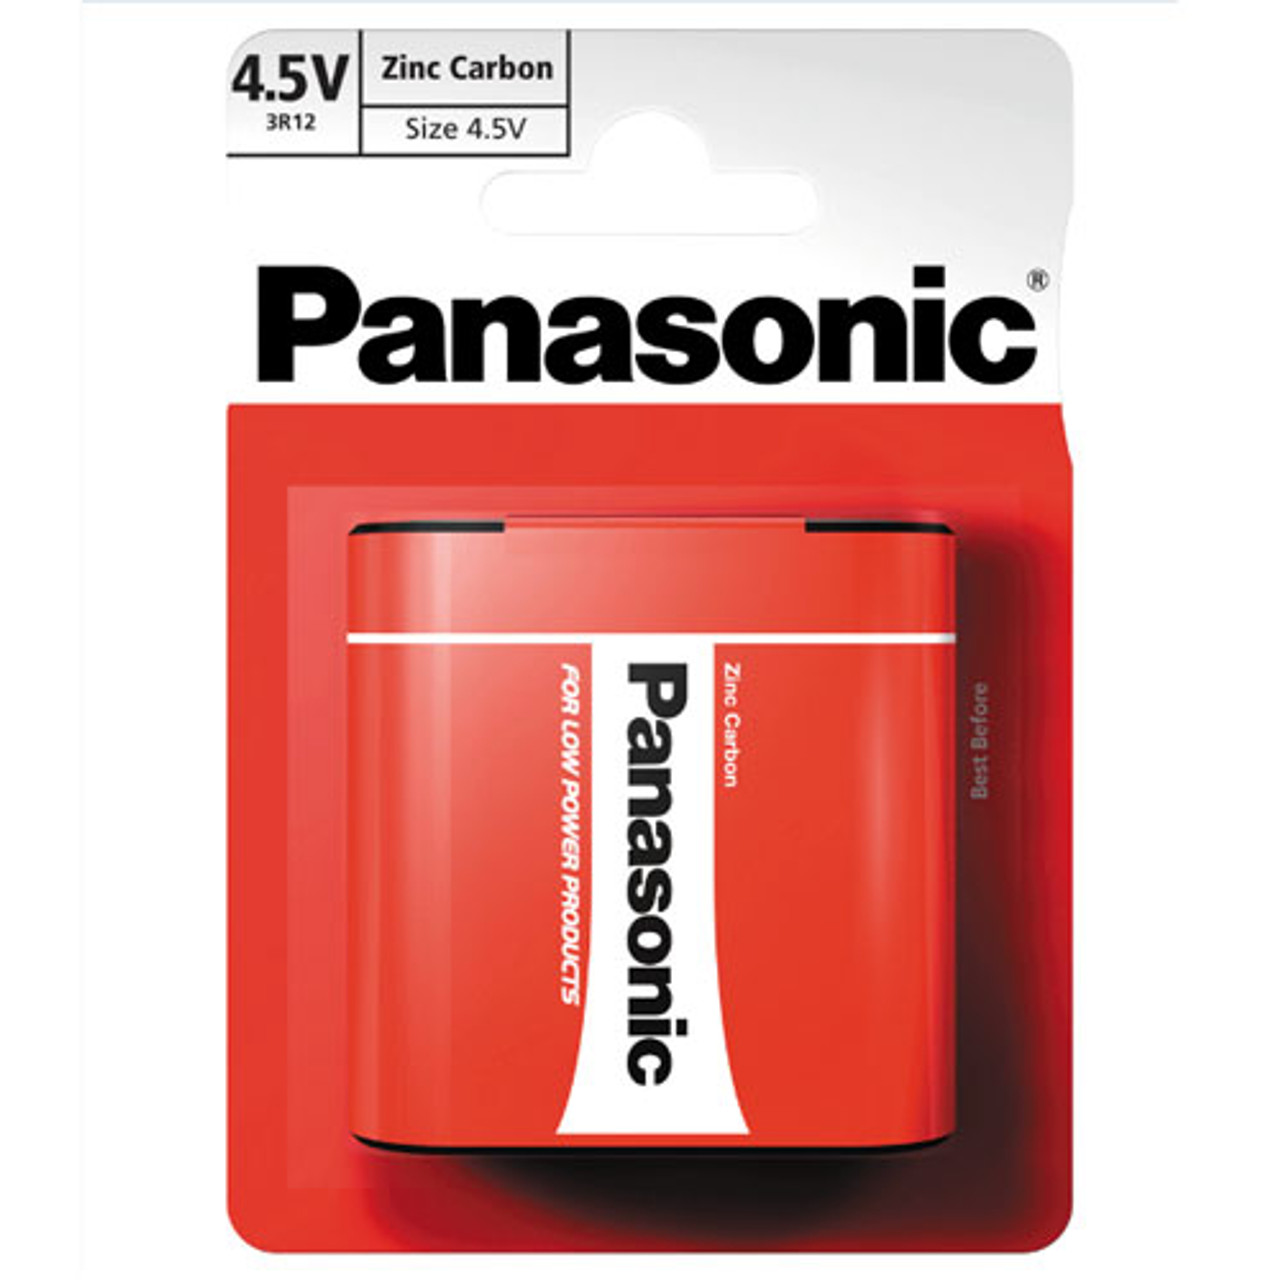 Батарейка Panasonic Zinc Carbon 3r12 bl1 4.5v 1/12/48. Элемент питания 3r12 - 4.5b. Элемент питания Panasonic 3r12 (квадрат) Zinc Carbon bl1 (12/48). Батарея 3r12 Panasonic.